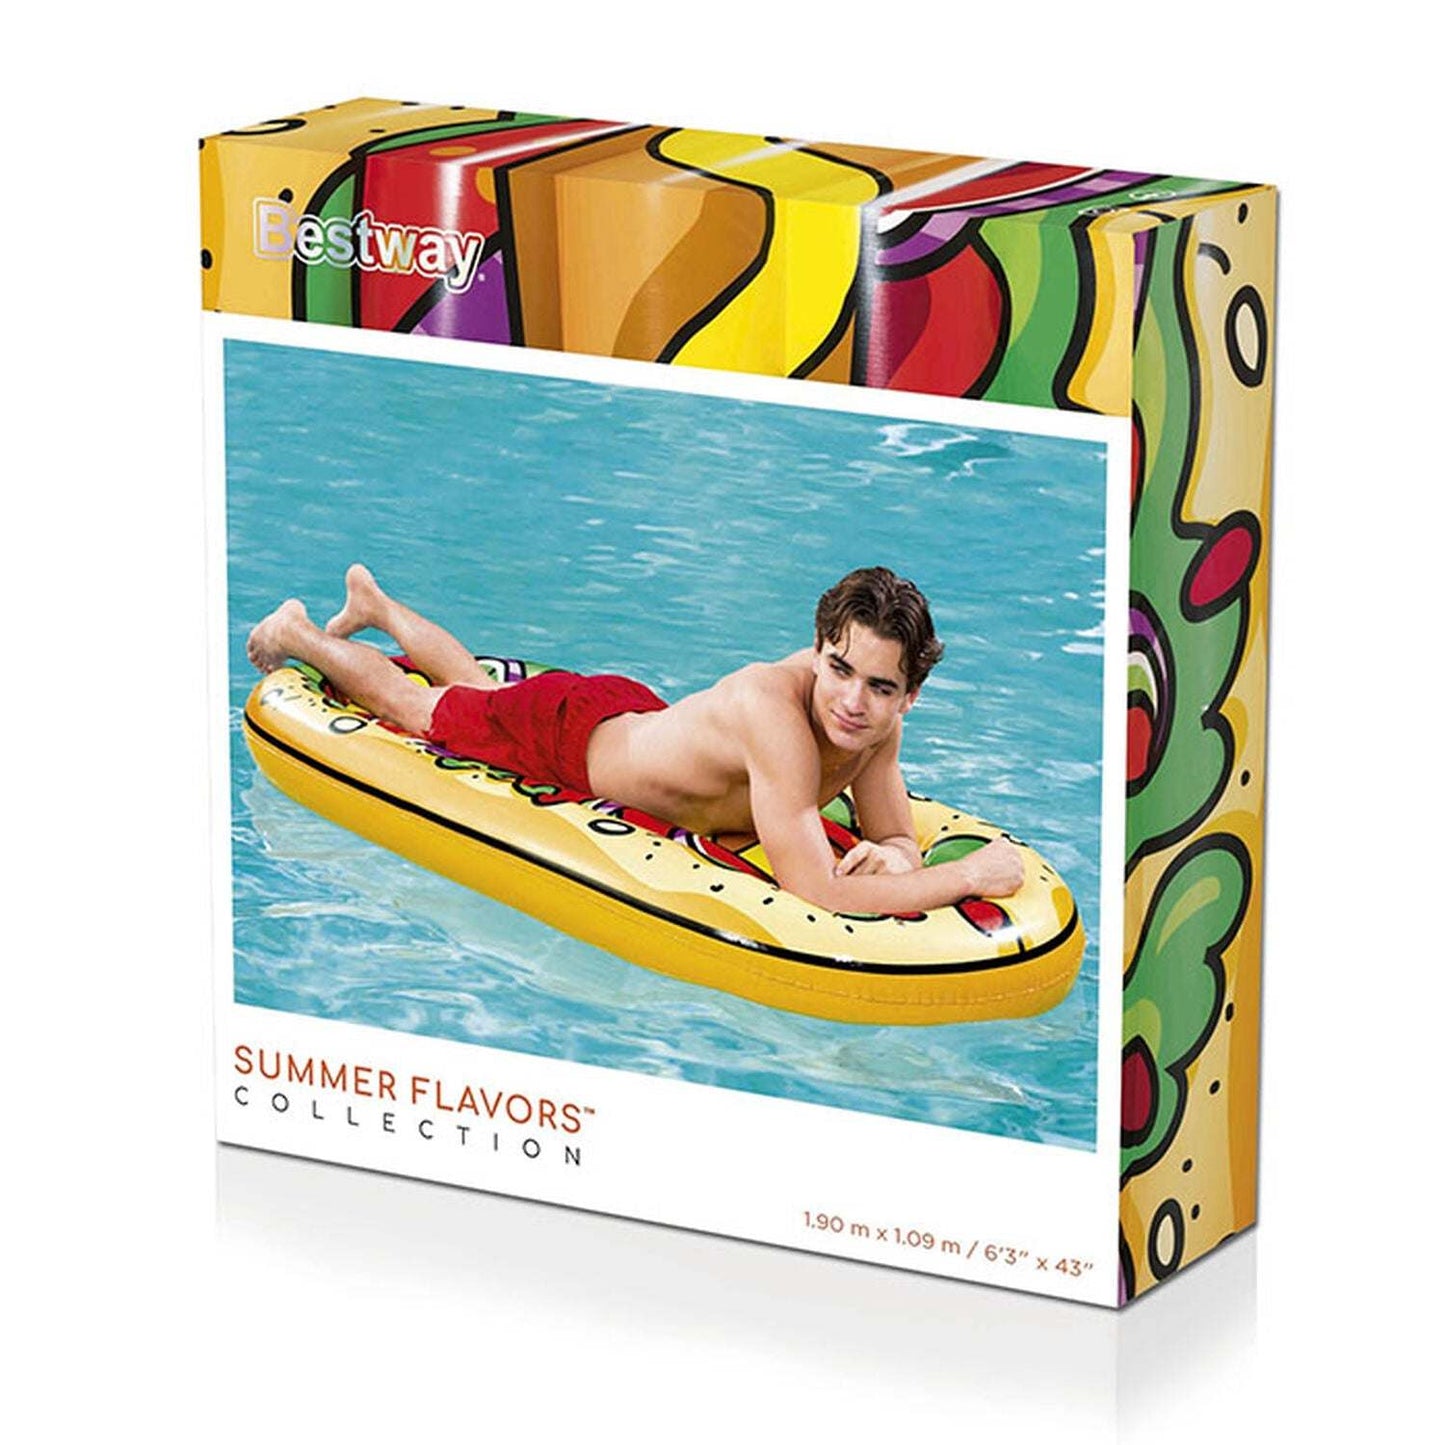 Hot Dog floating Pool Lounger